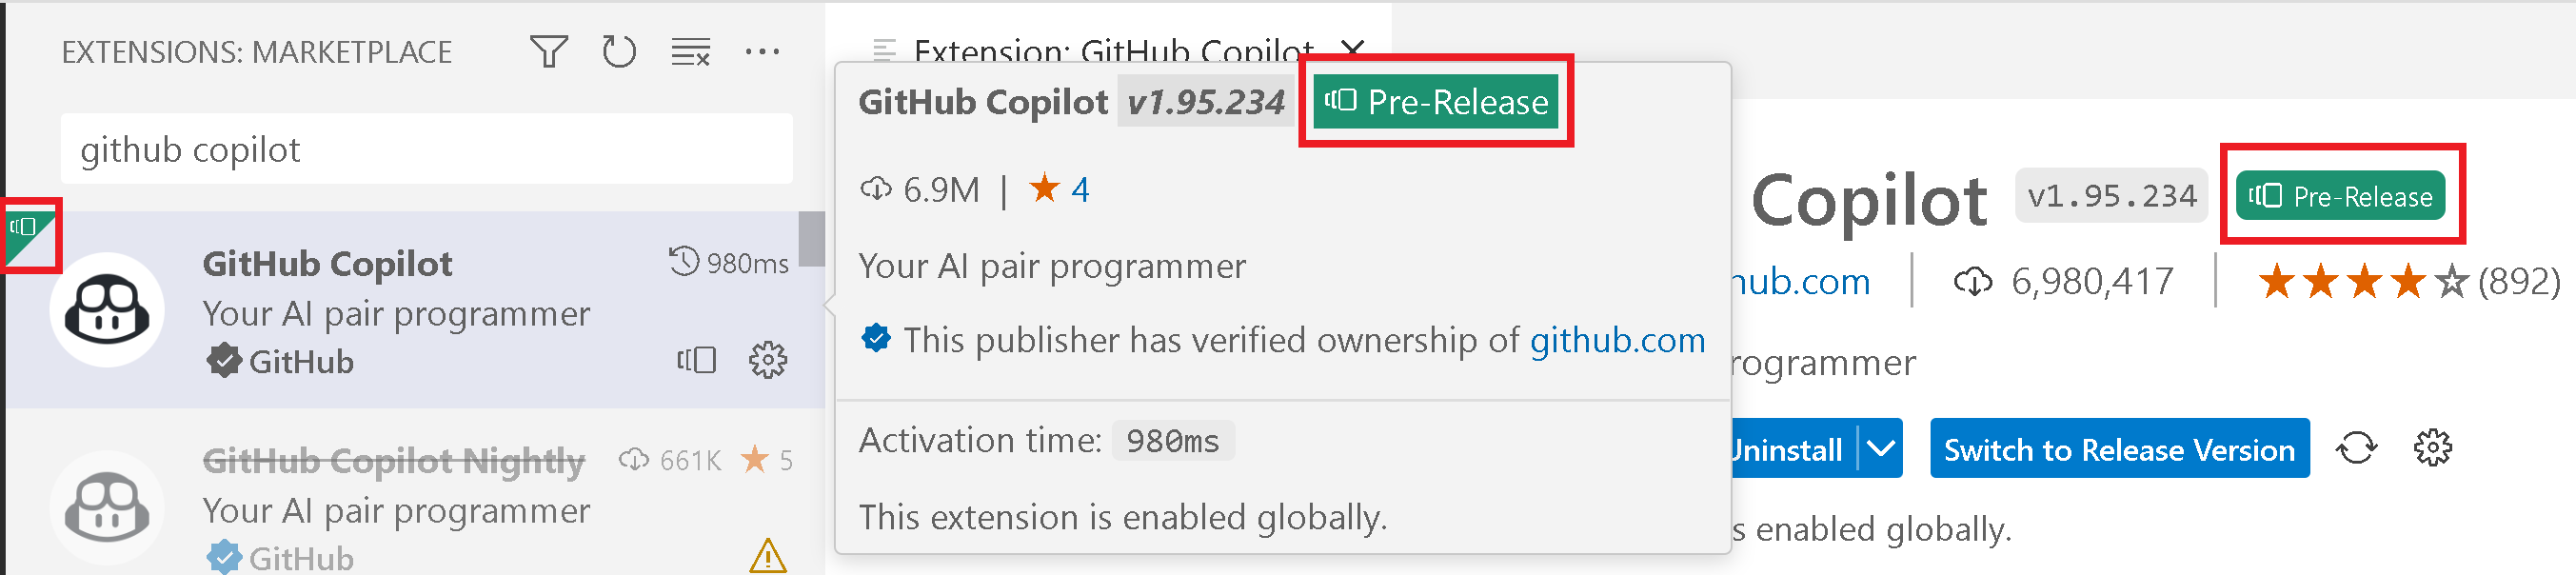 Pre-release version of Copilot extension